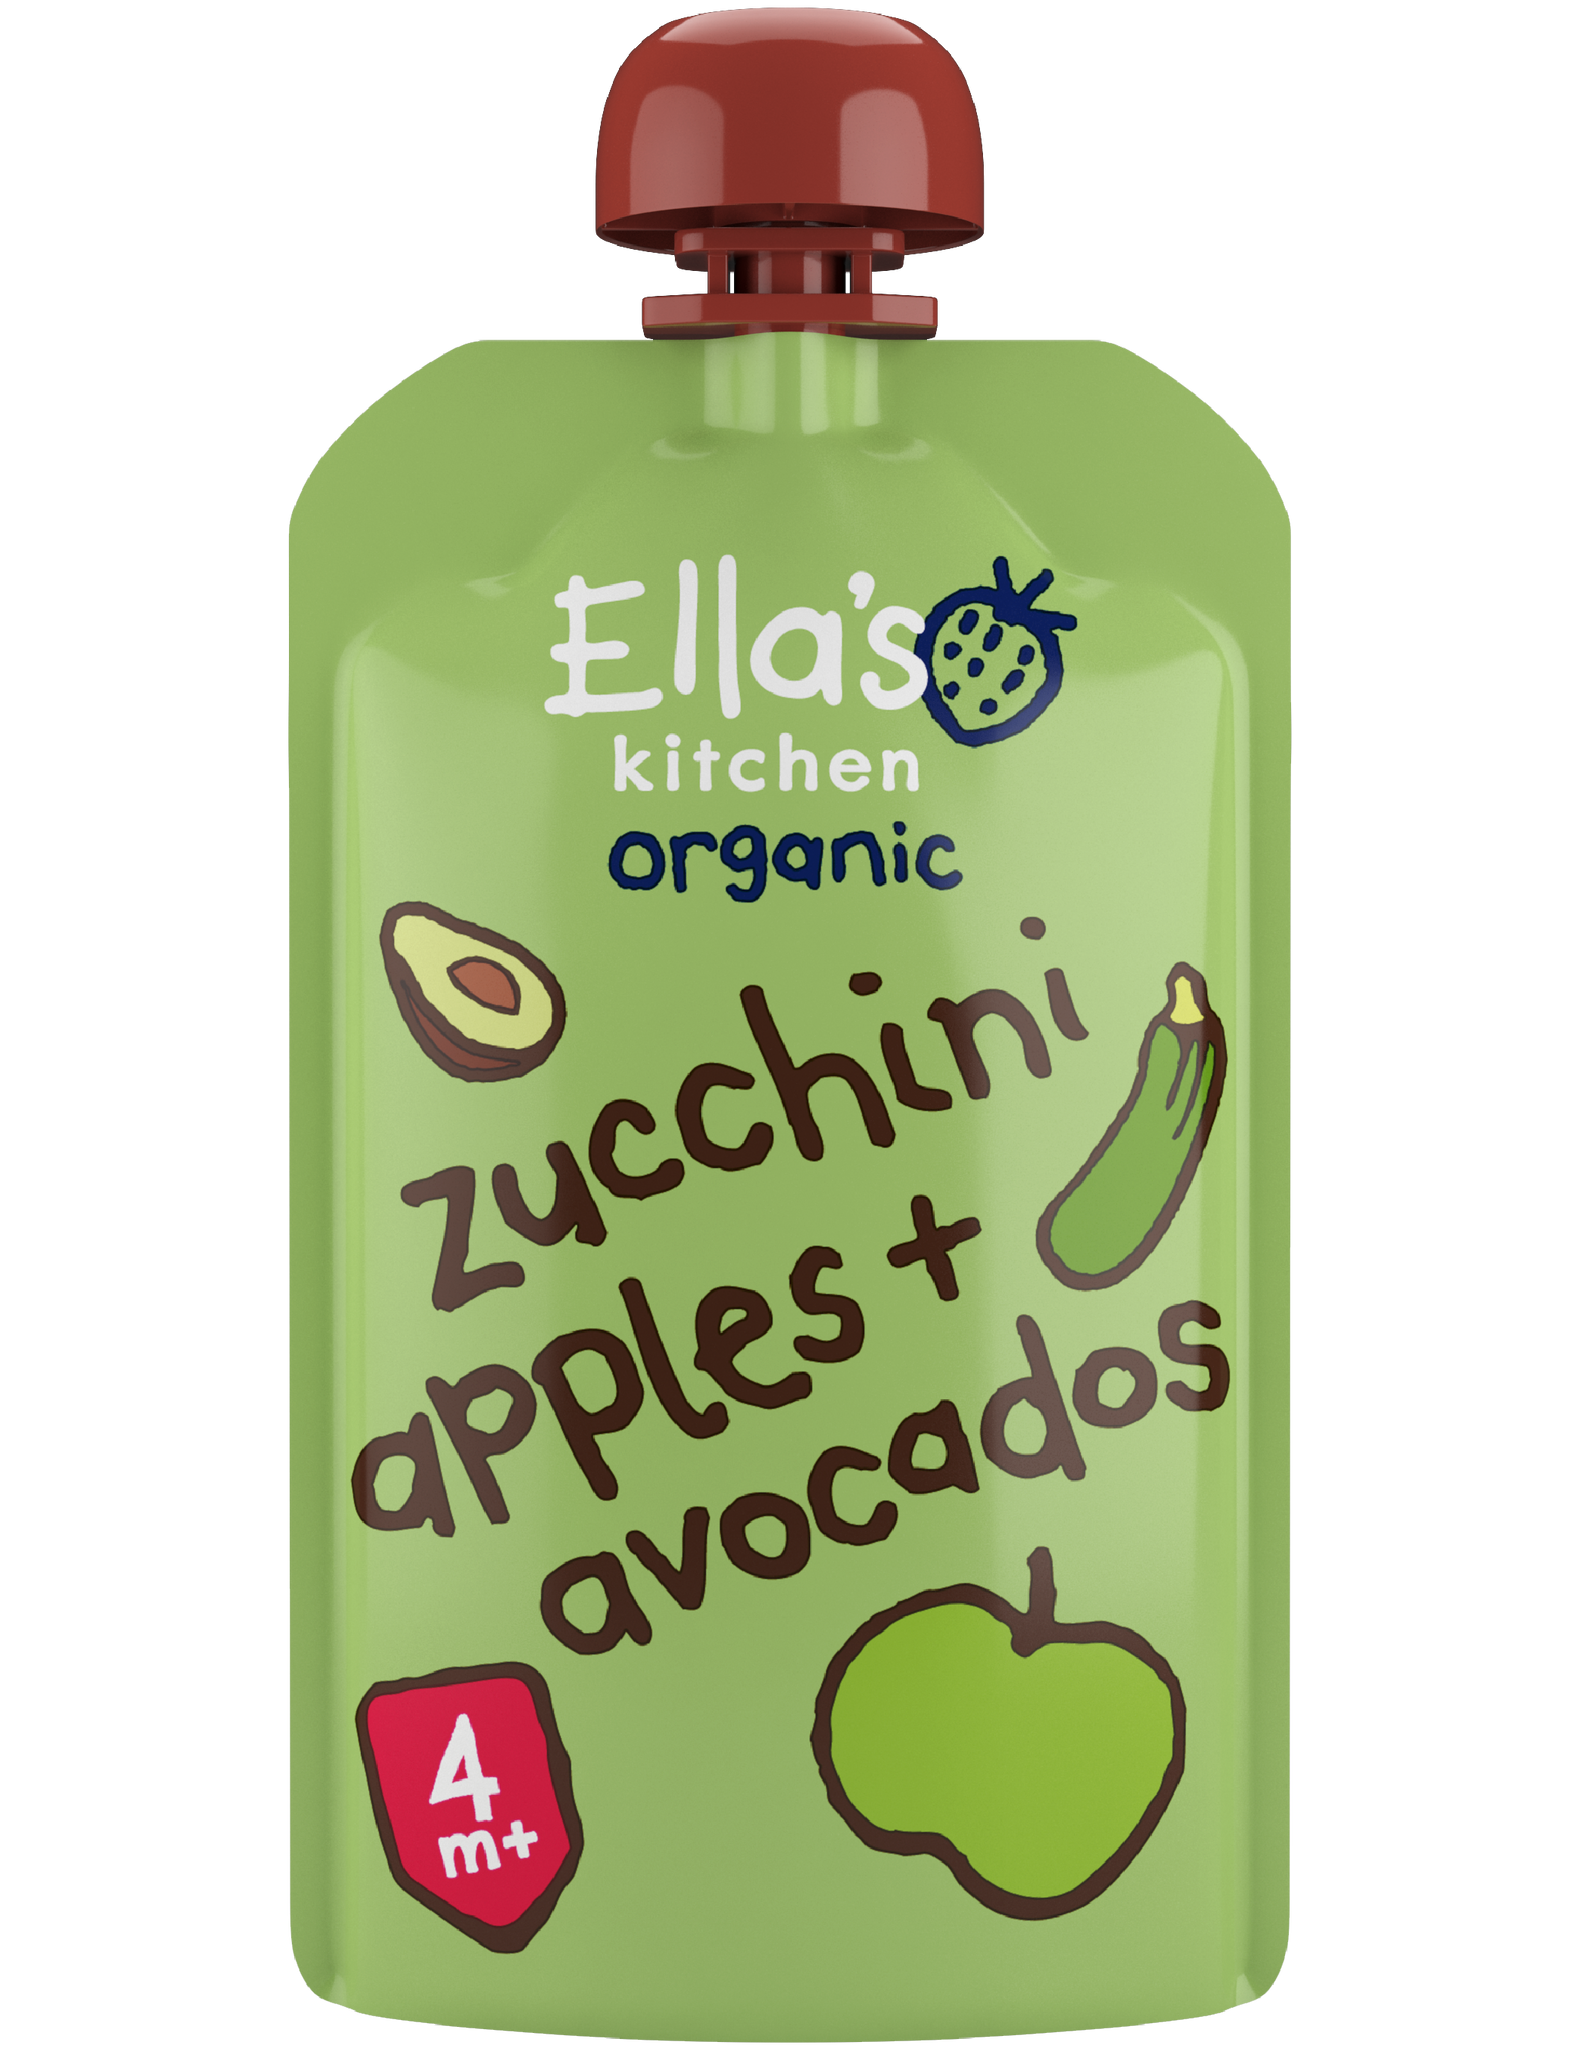 zucchini, apples + avocados - 7 x 120 g